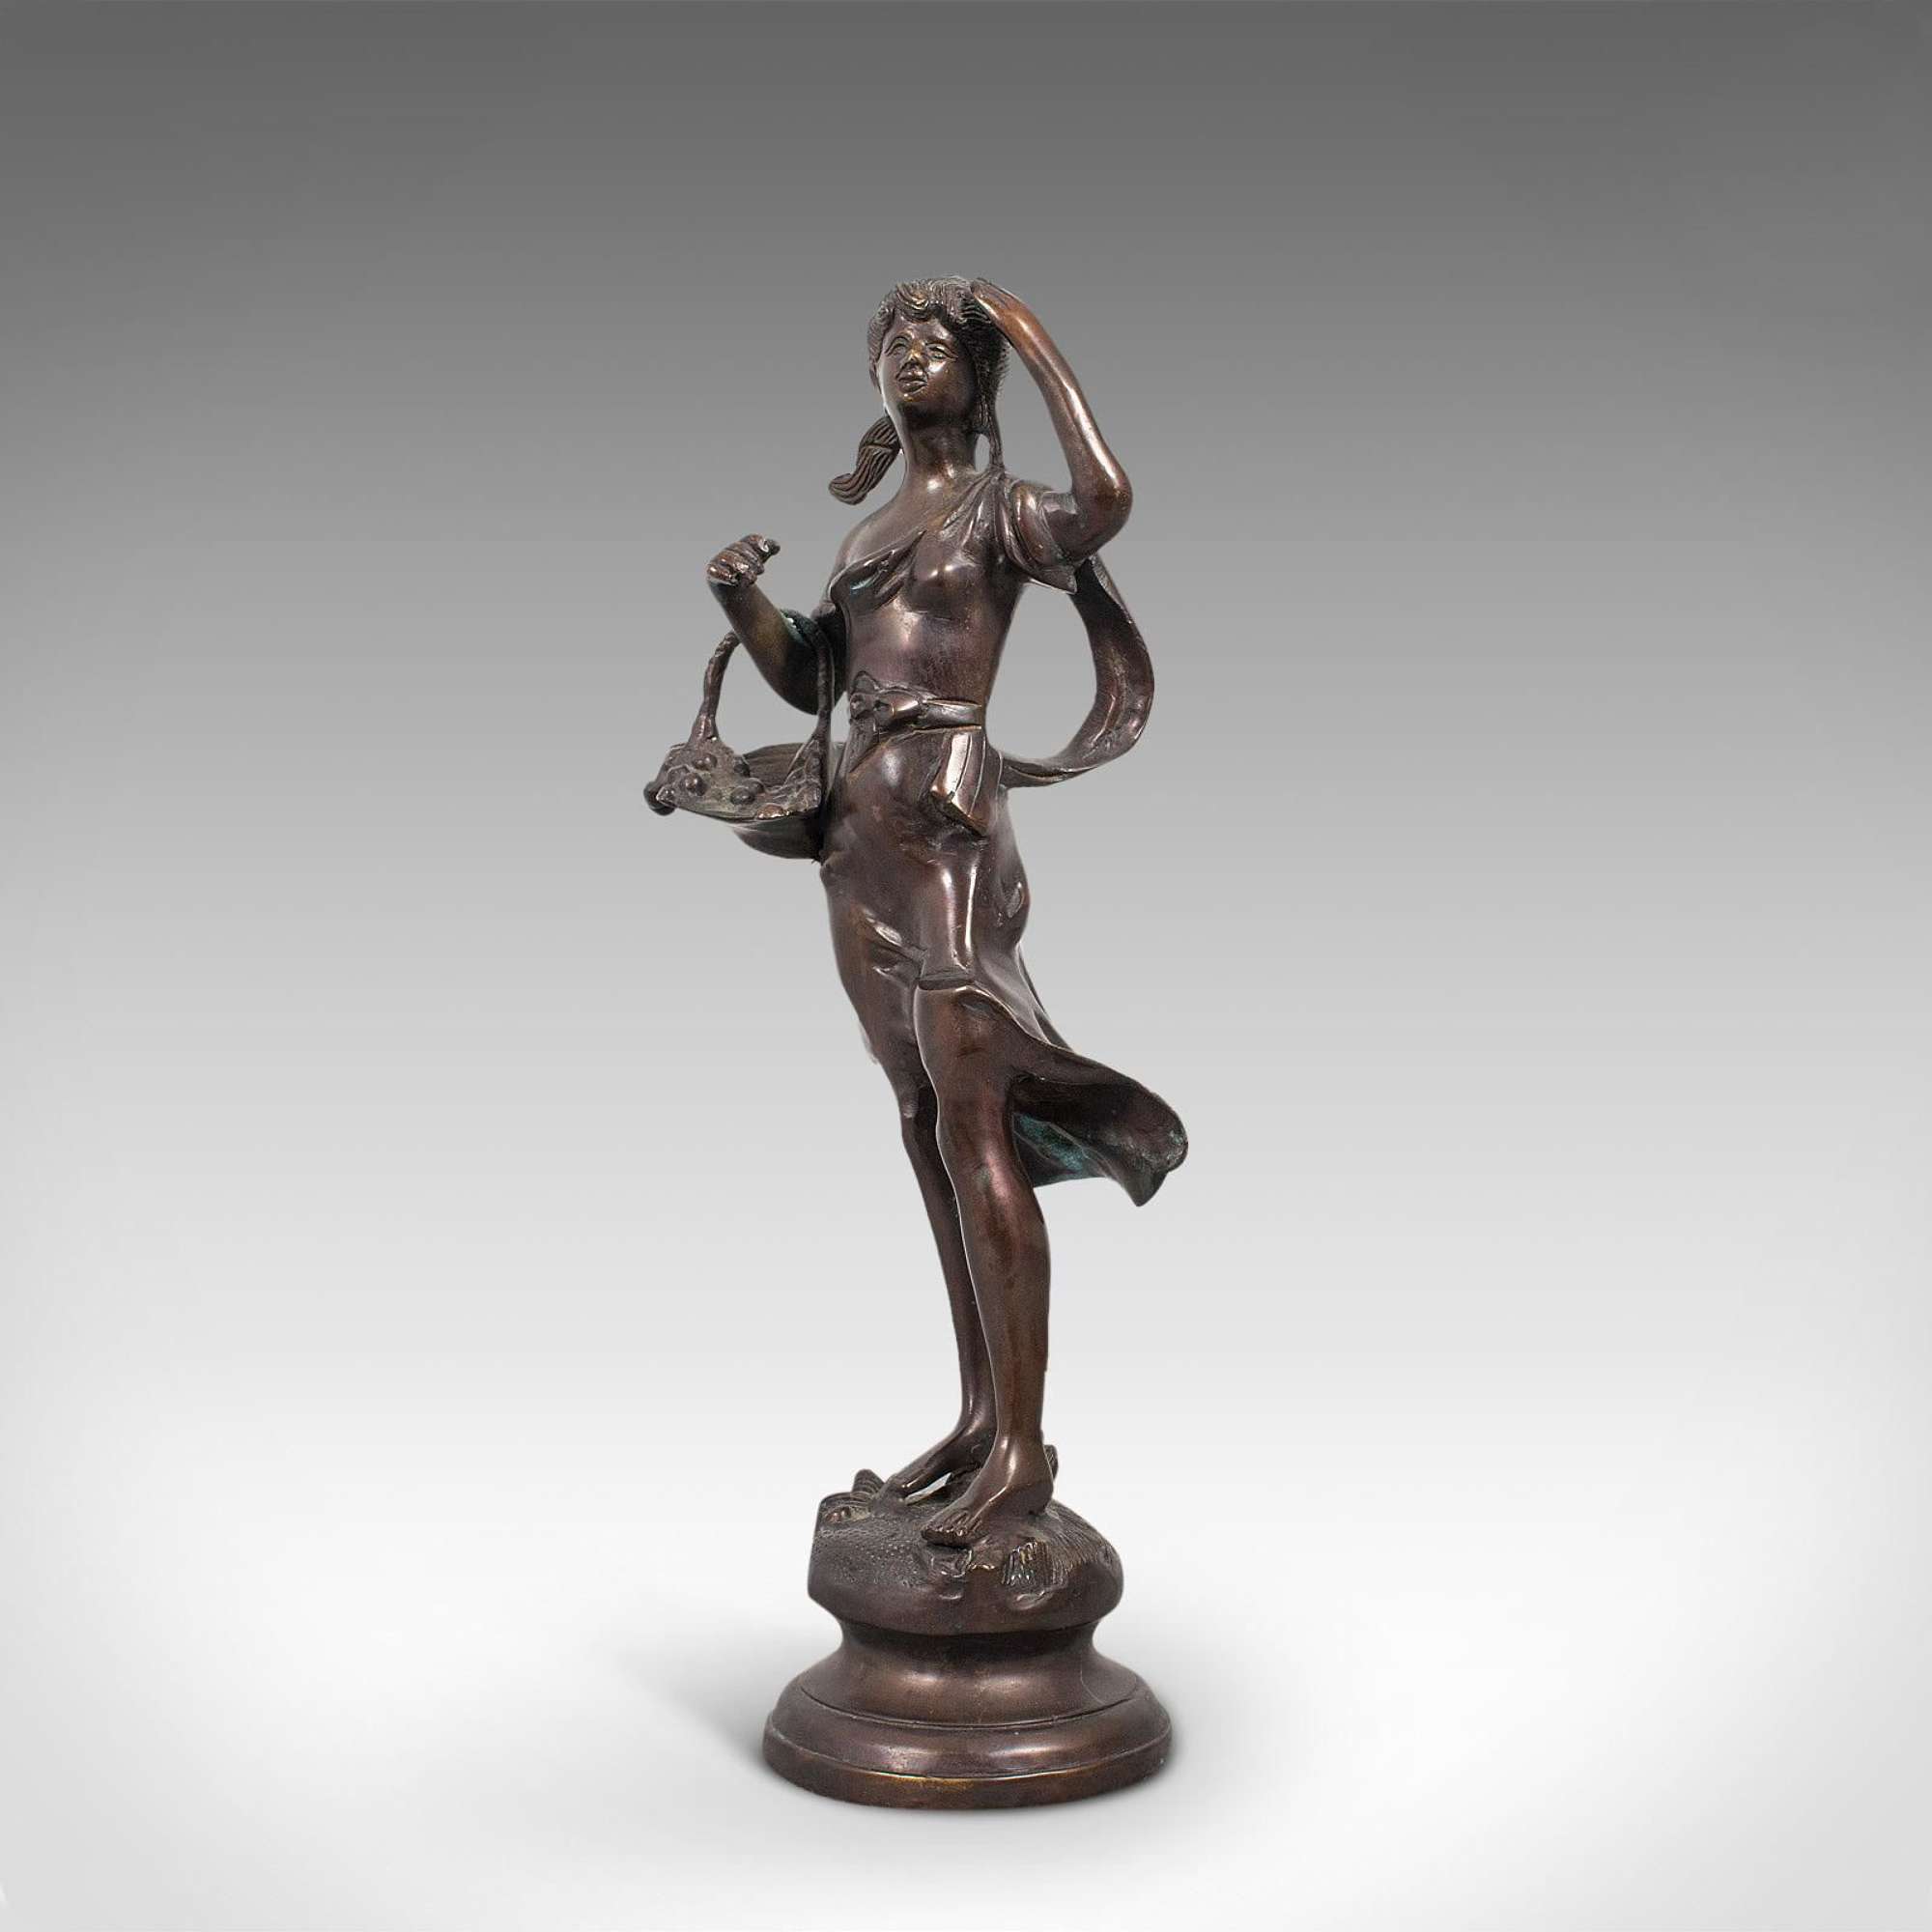 Tall Antique Female Statue, Italian, Bronze, Sculpture, Girl, Victorian, C.1900